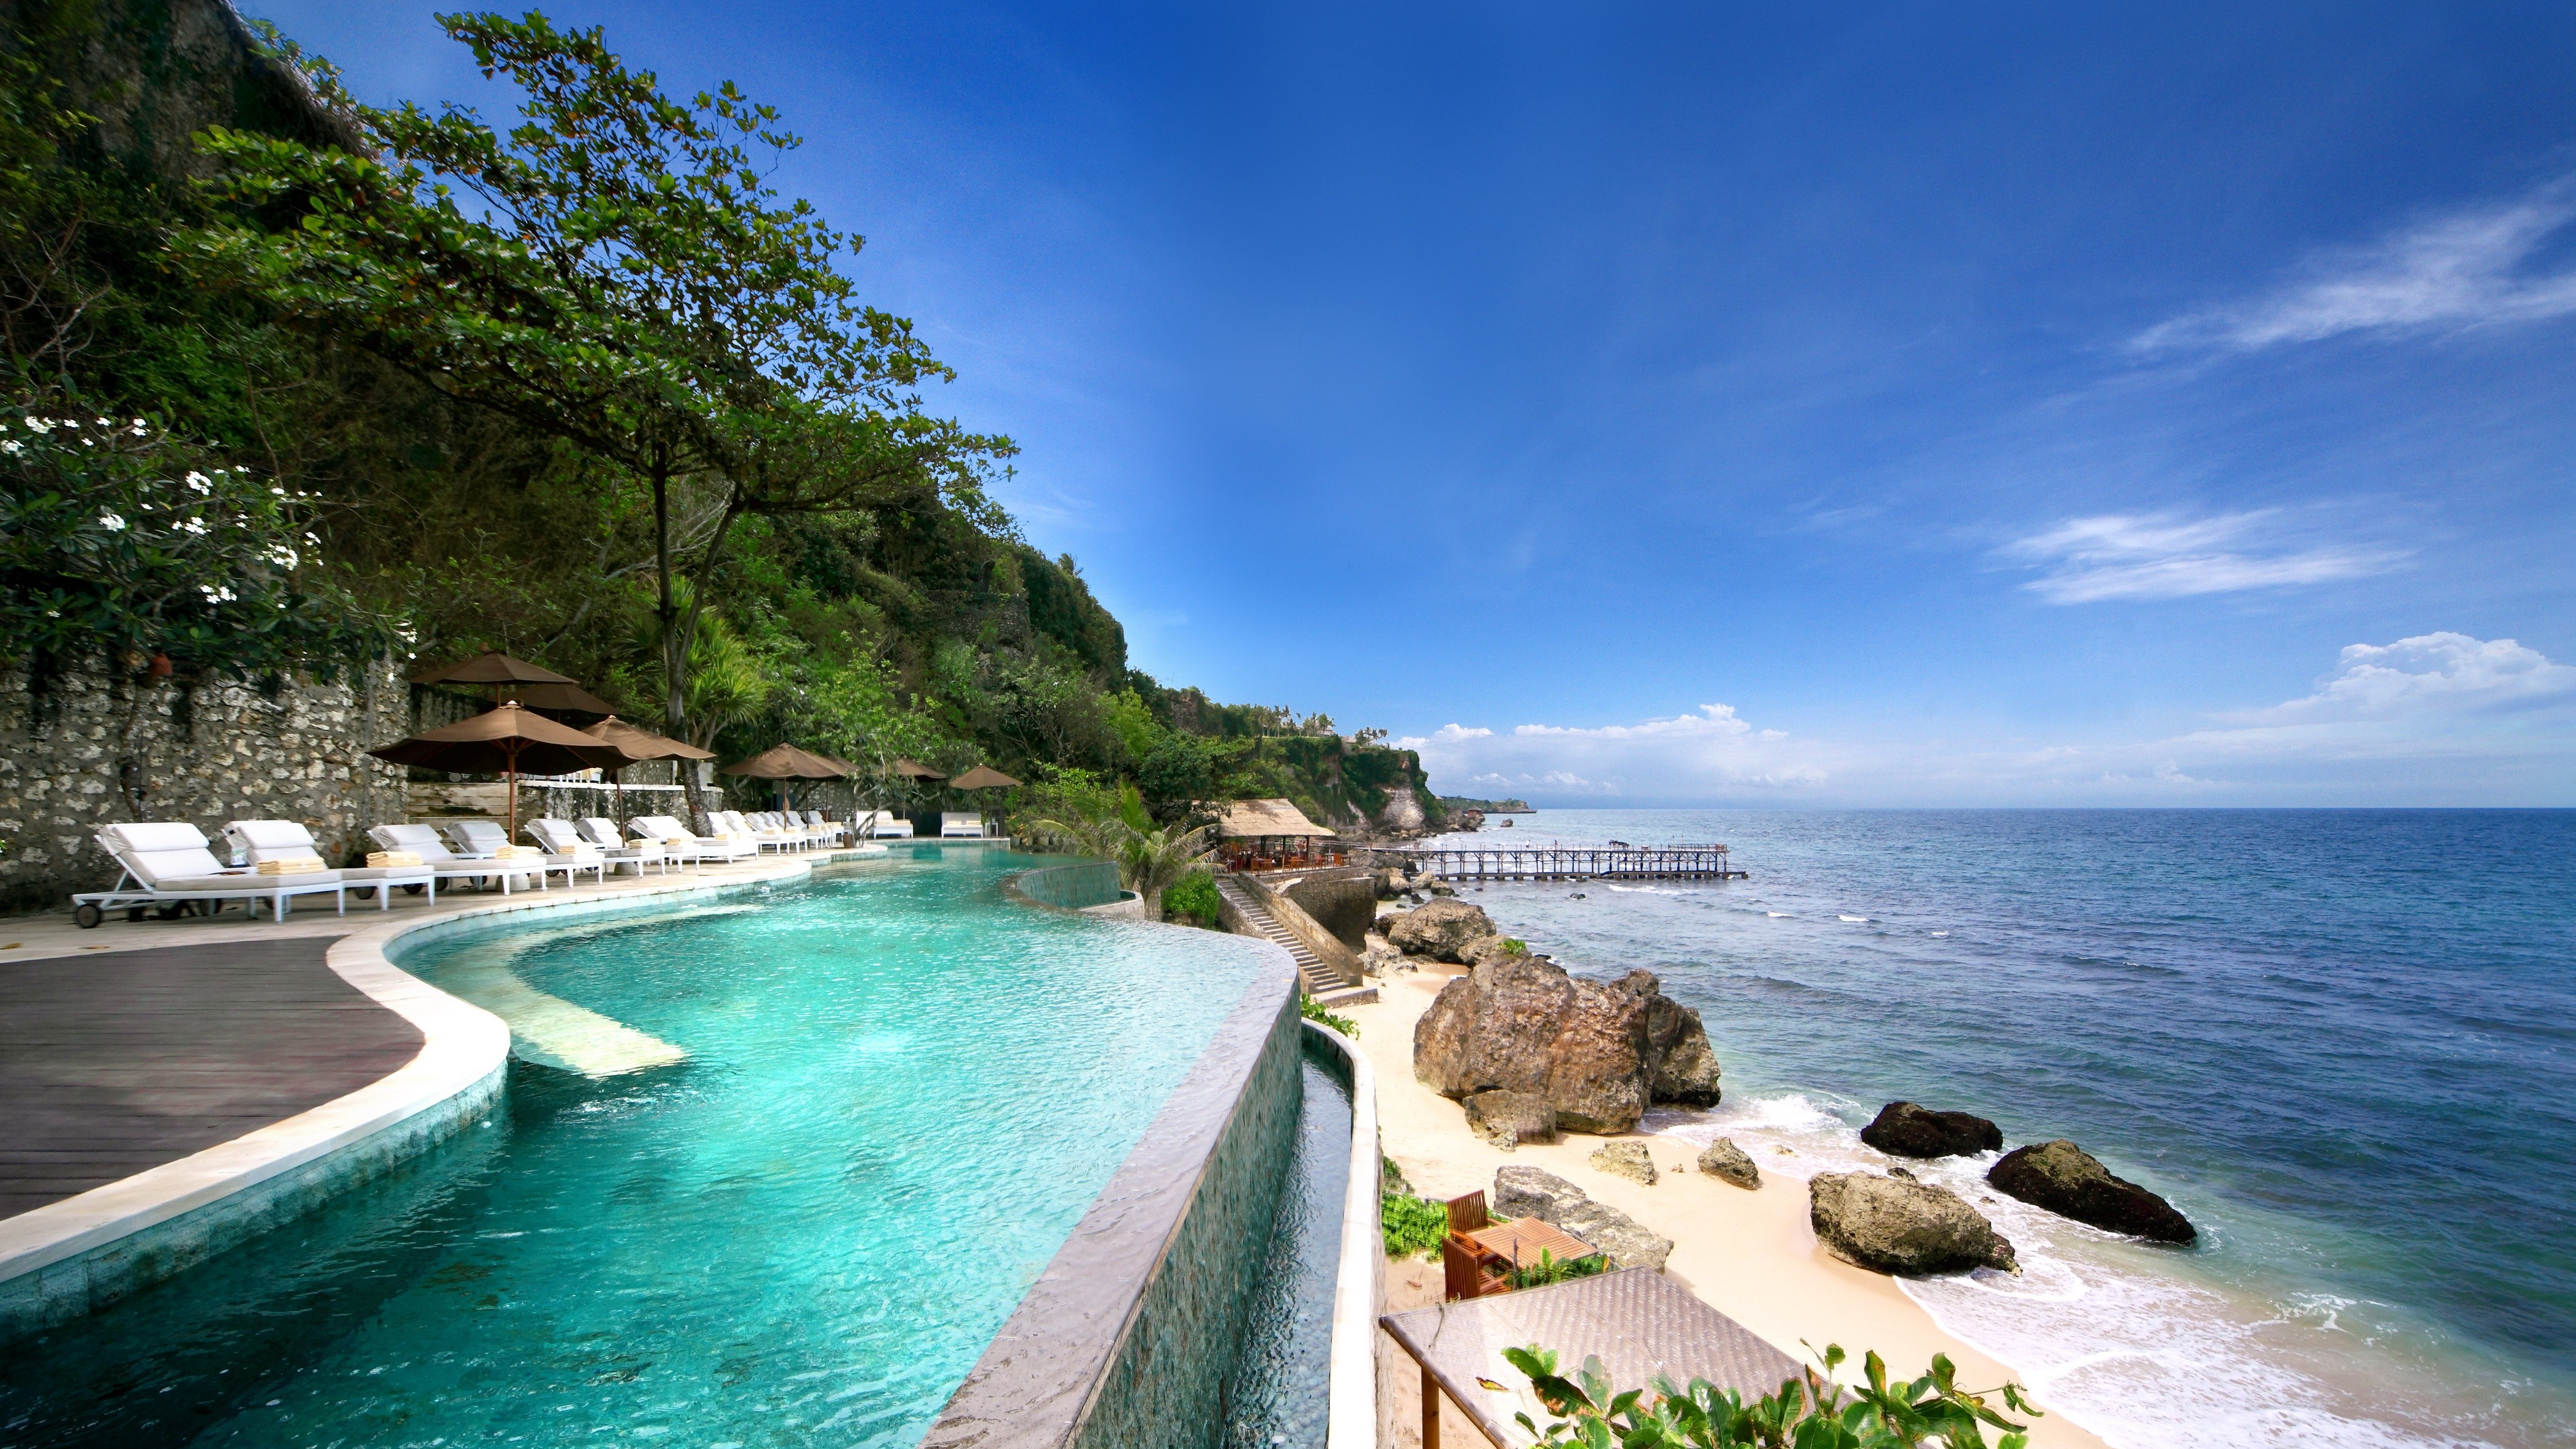 Bali attractions